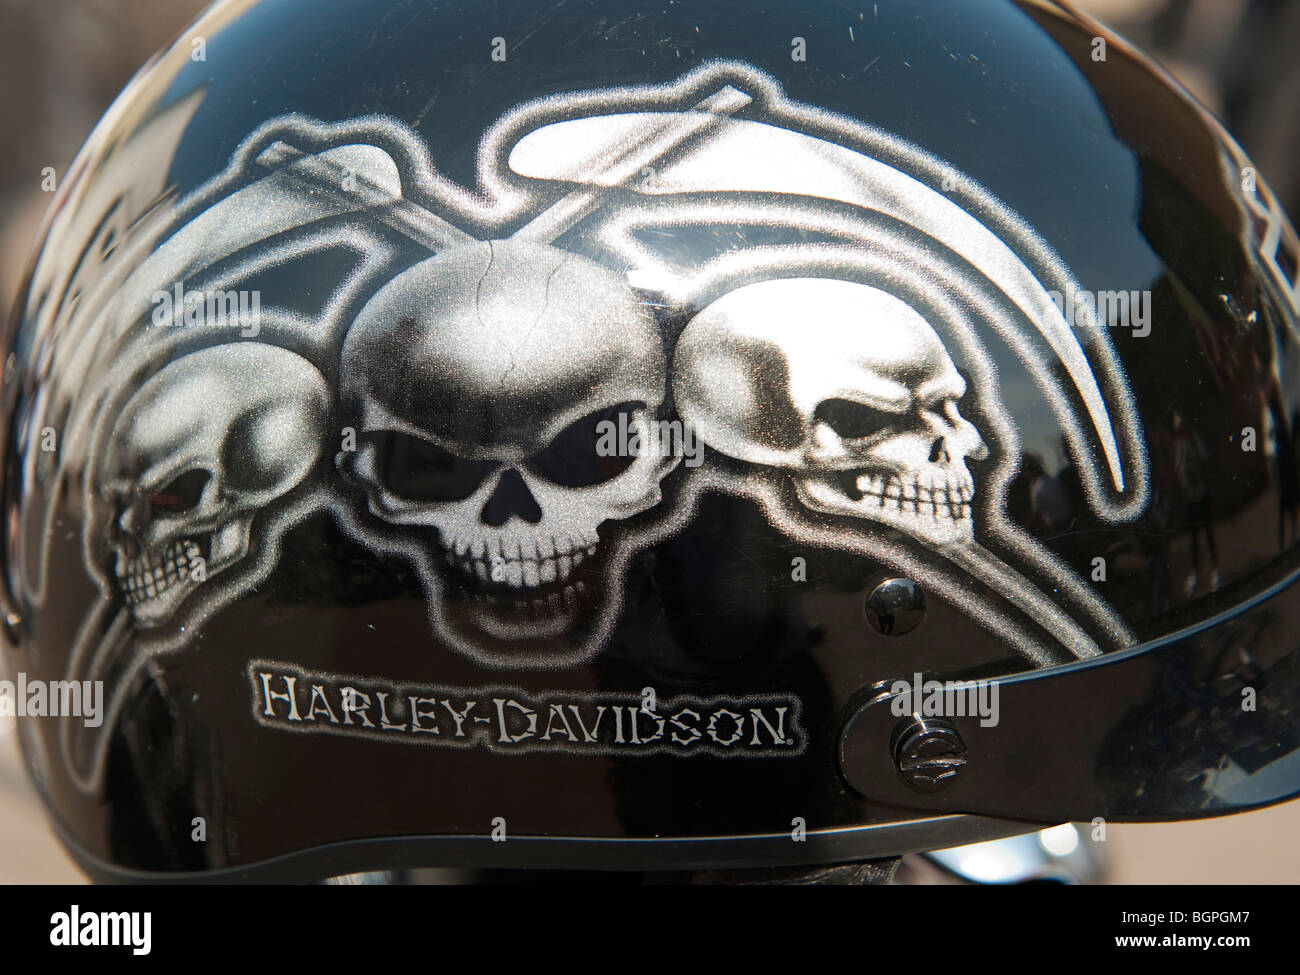 Harley Davidson helmet Stock Photo - Alamy